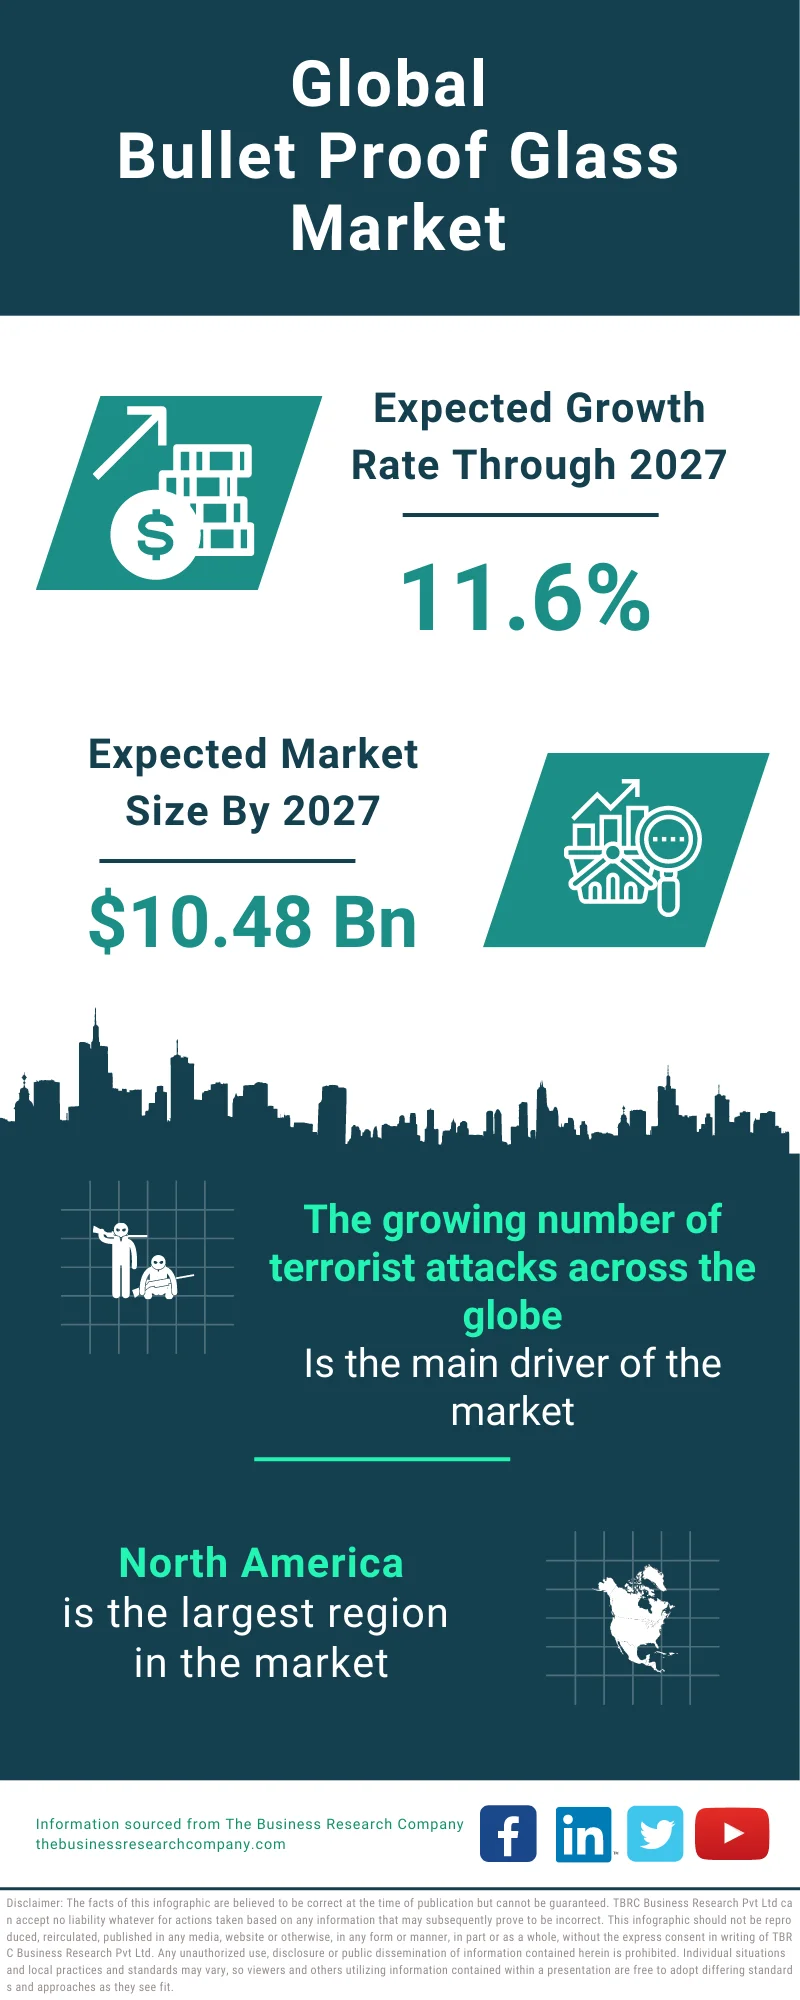 Bullet Proof Glass Global Market Report 2023